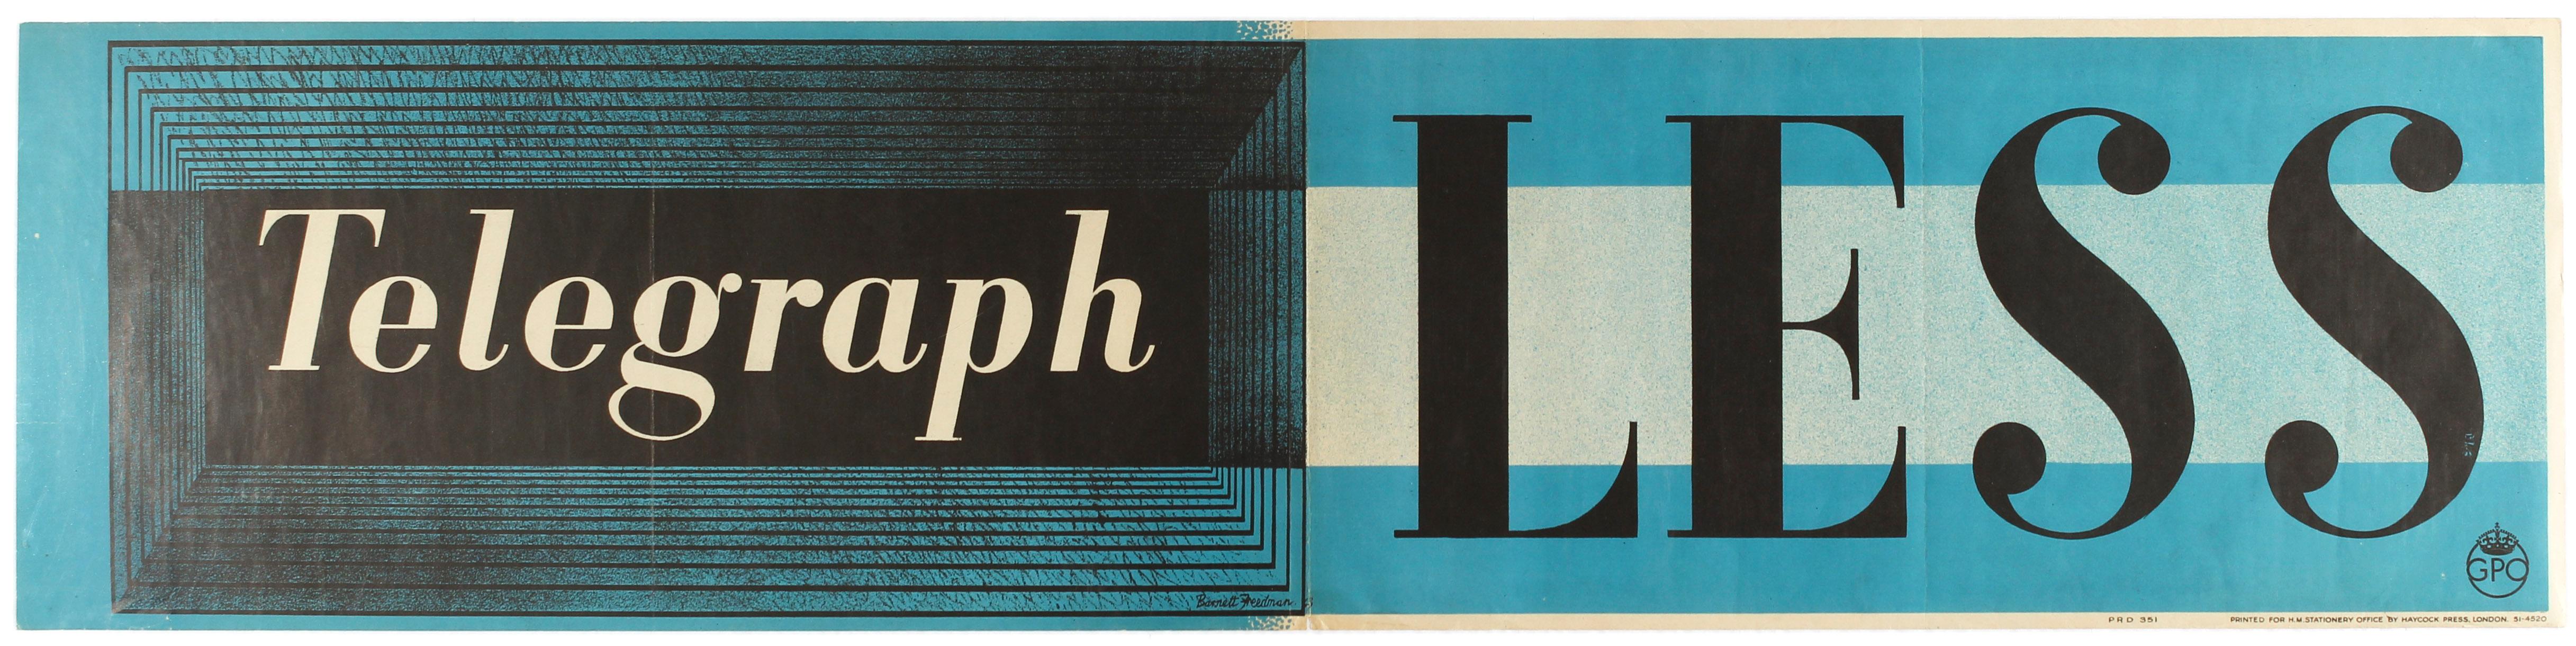 Barnett Freedman Print - Original Vintage Poster Telegraph Less GPO Post Office WWII Modernist Typography